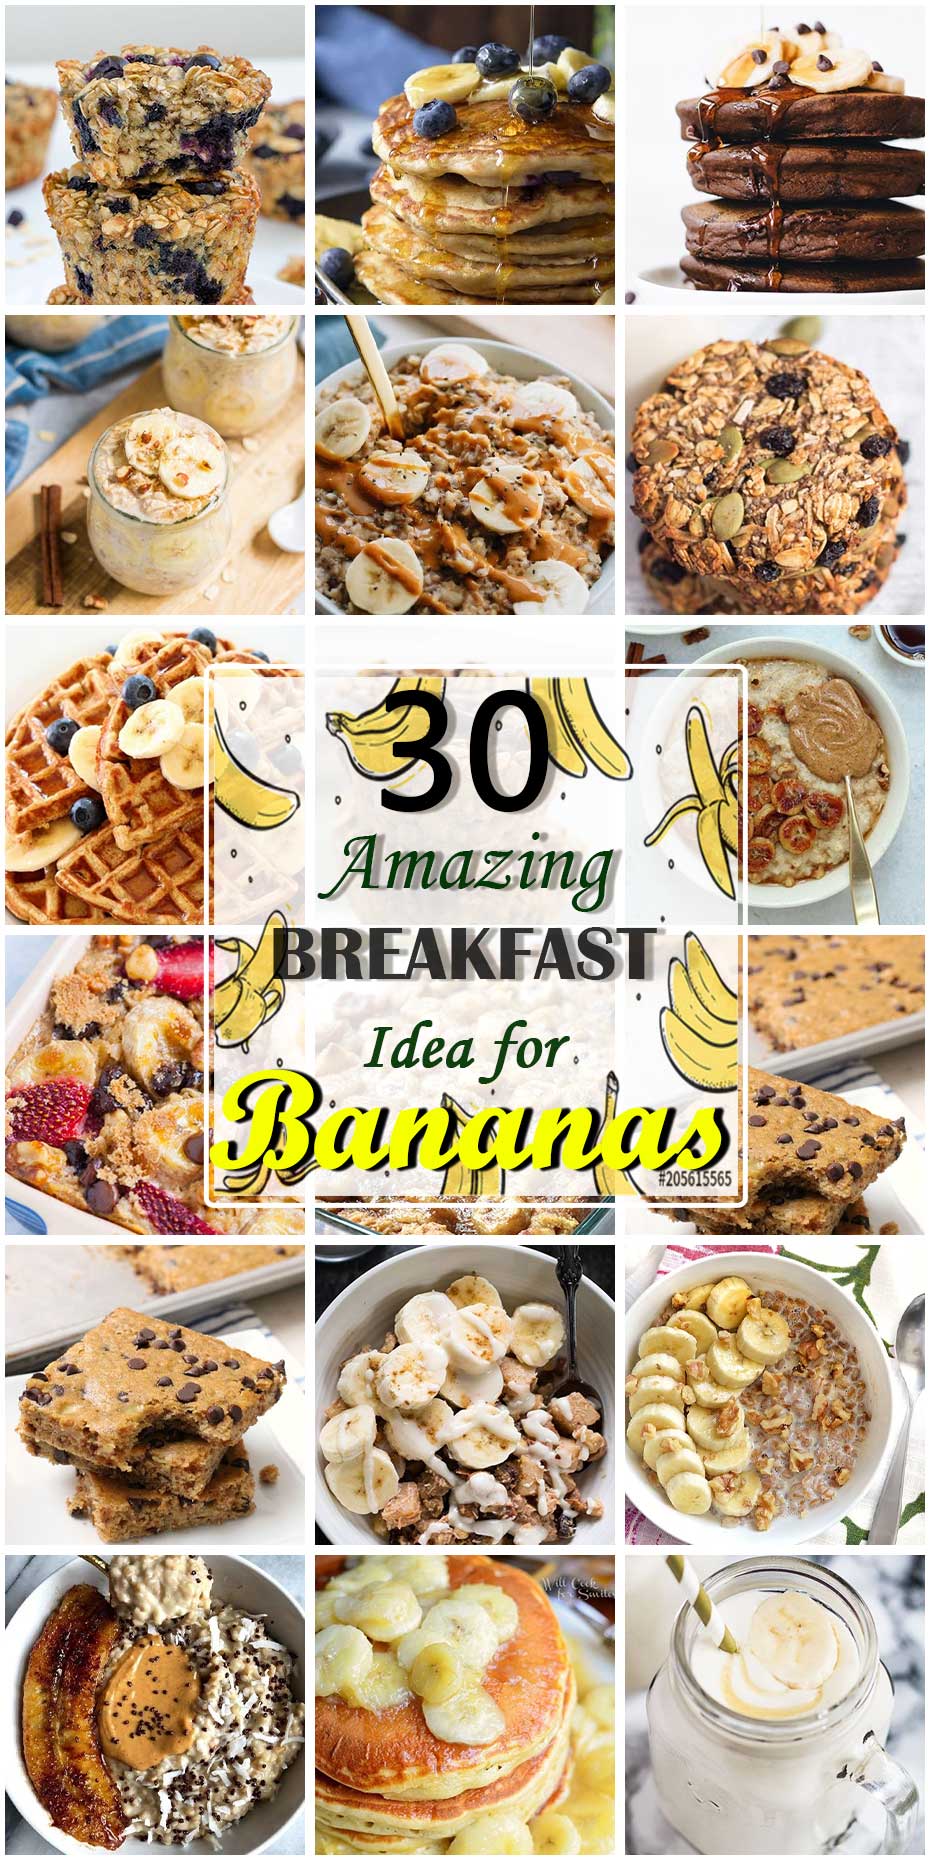 30 Amazing Breakfast Ideas For Bananas